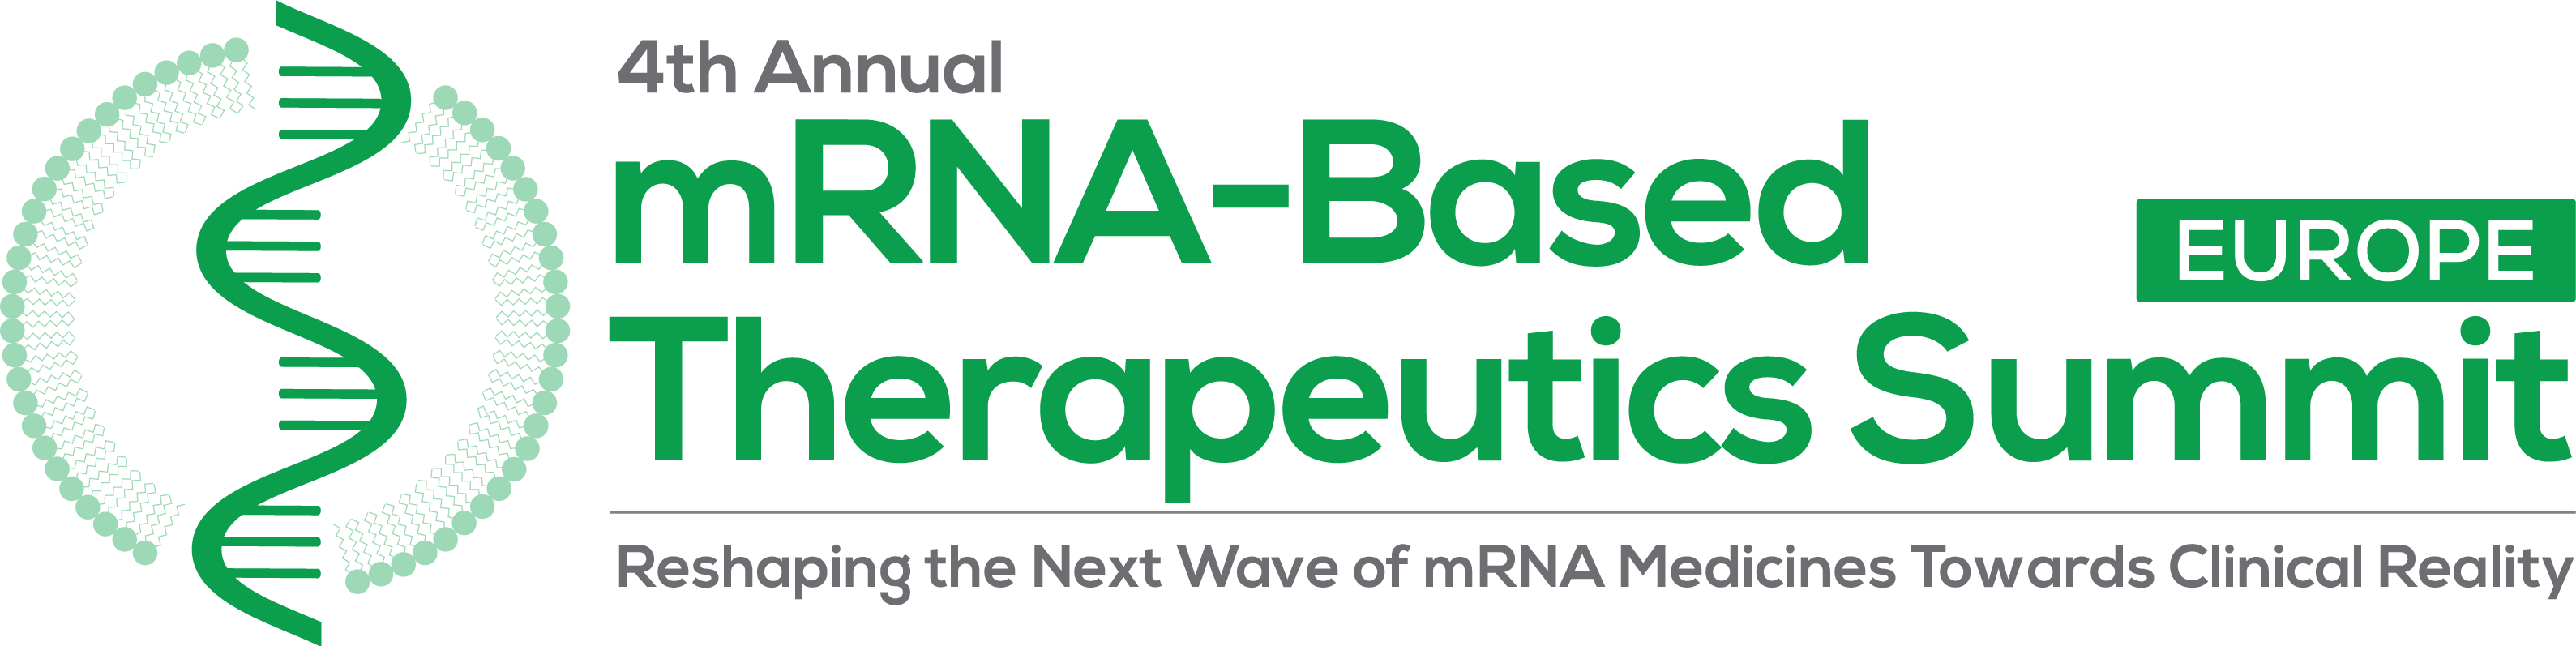 mRNA-Based Therapeutics Summit Europe STRAPLINE